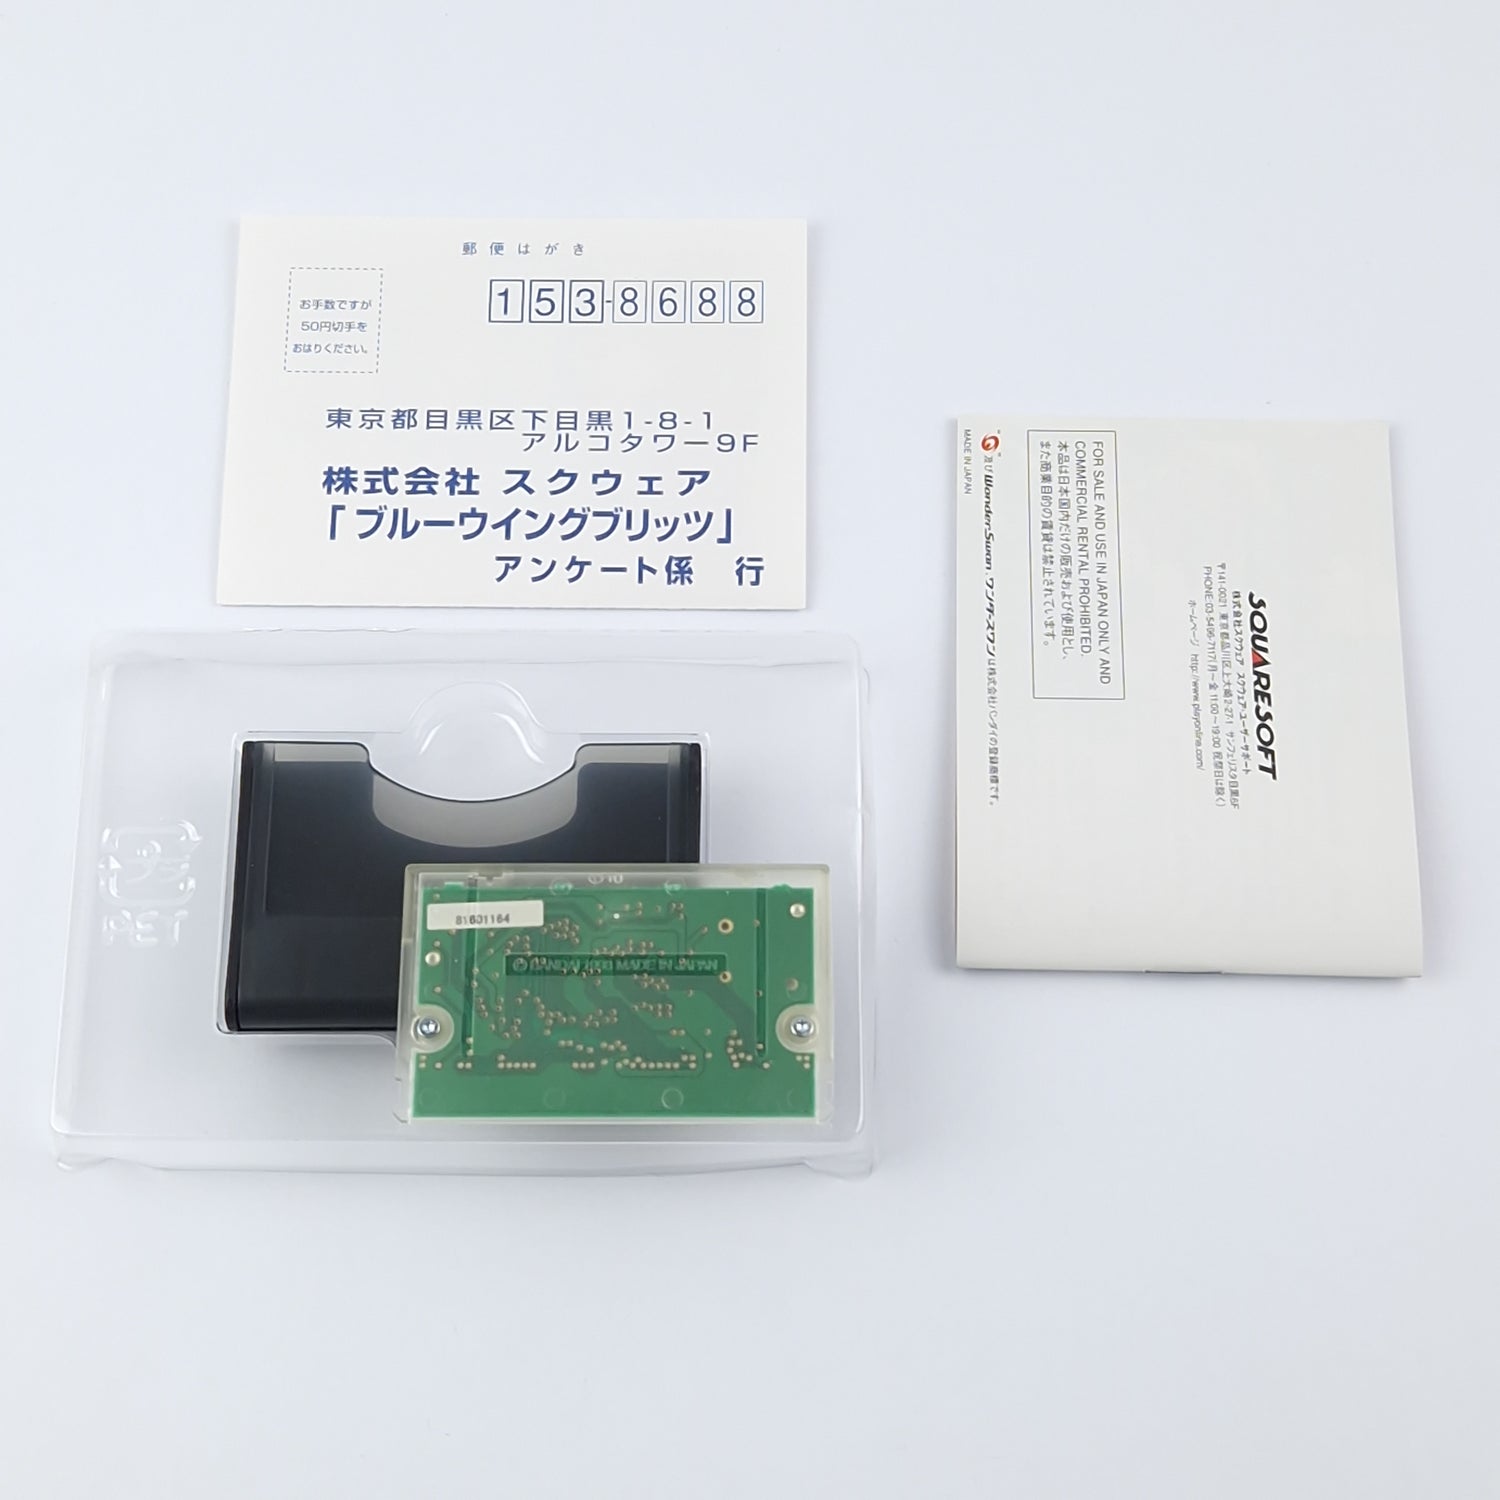 Wonderswan Game: Blue Wing Blitz - OVP Instructions Module | NTSC-J Japan Game